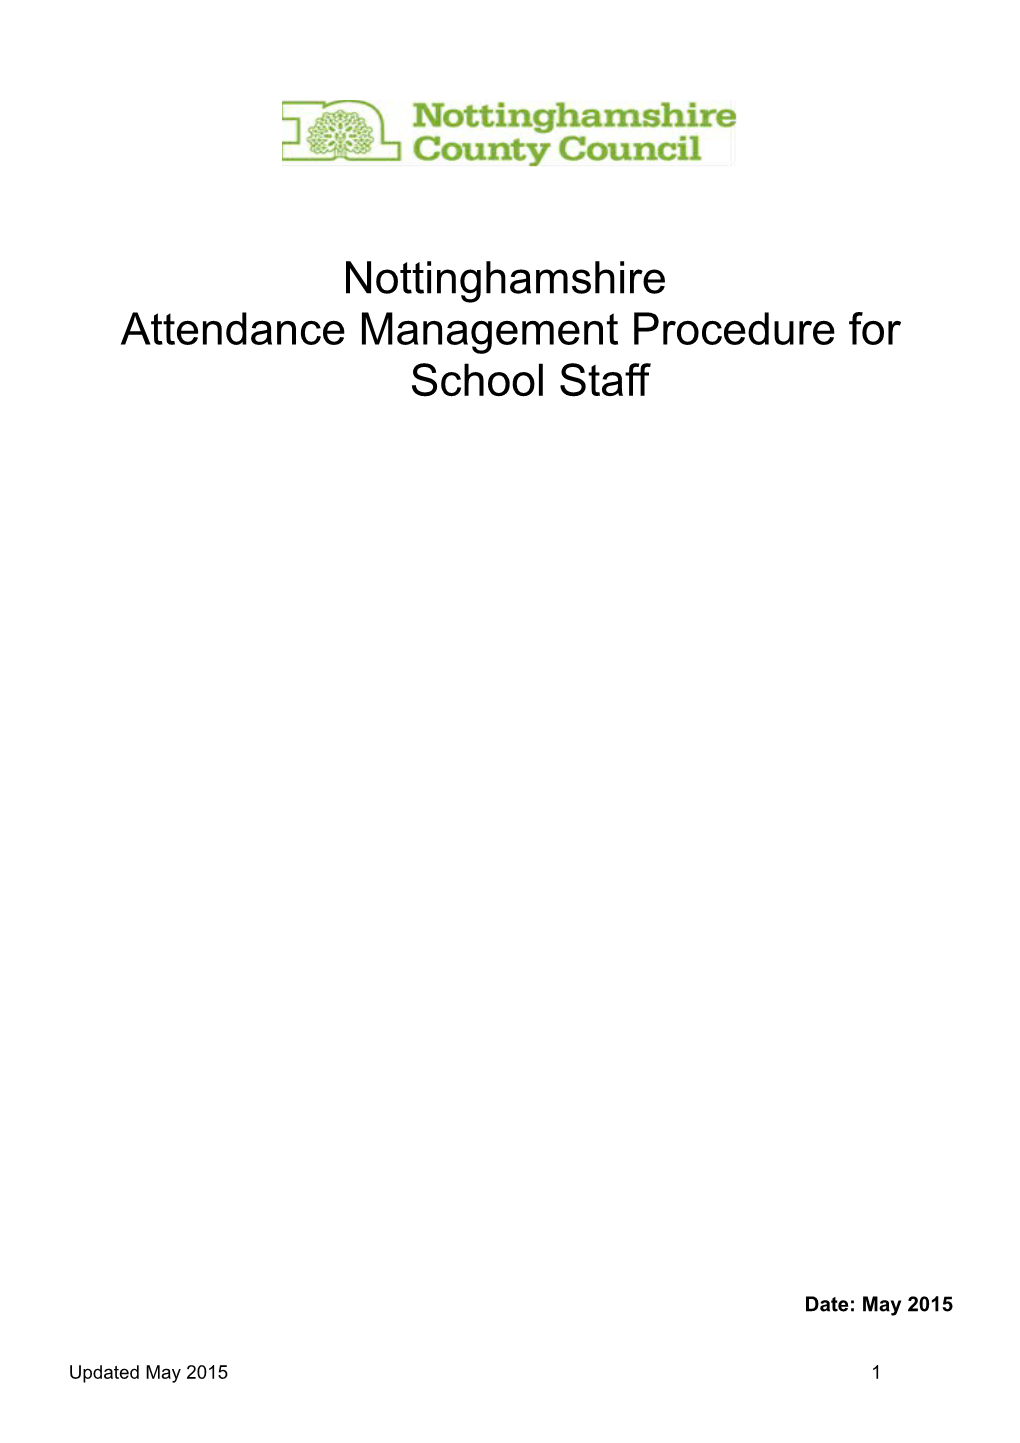 Attendance Management Procedure - Revised 2015